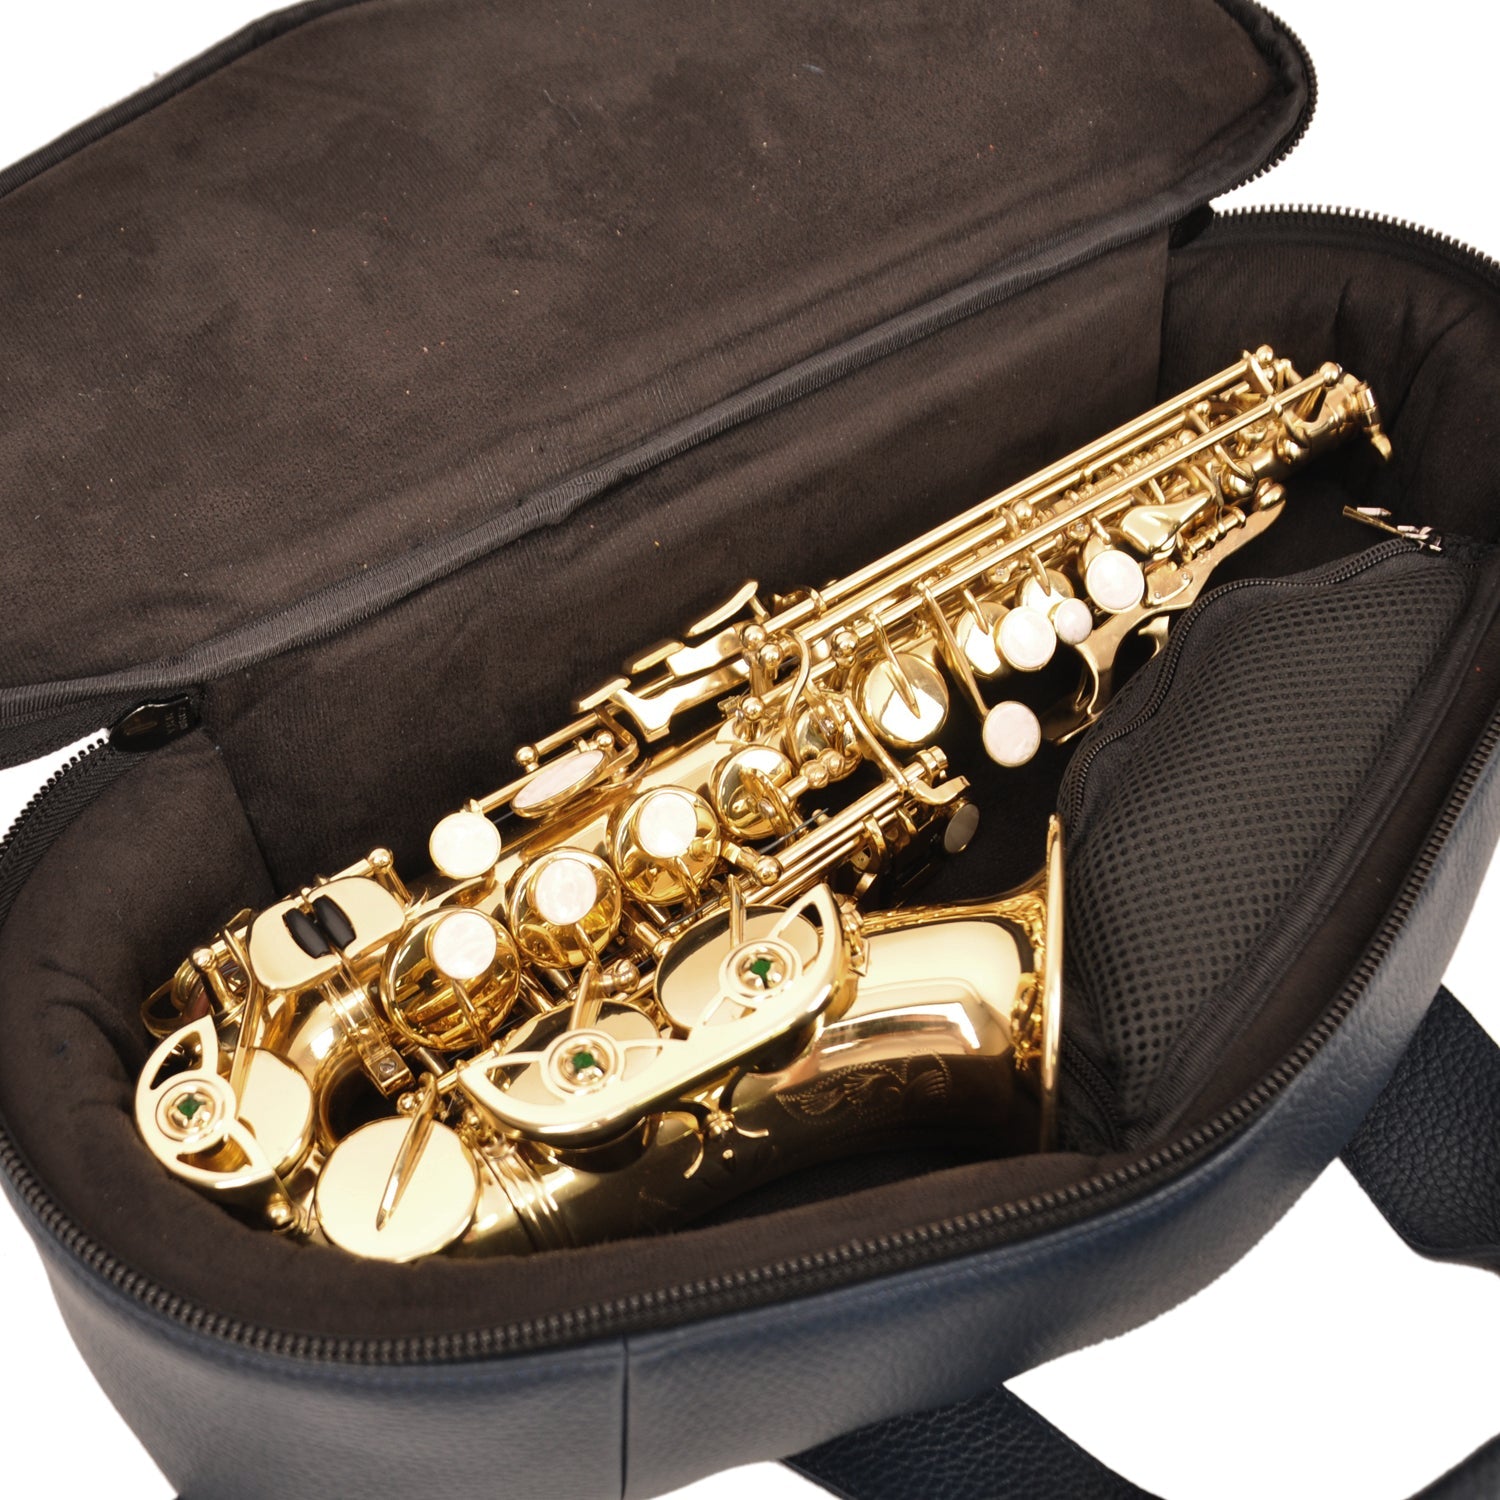 Curved Soprano Saxophone Gig Bag Flotar Leather